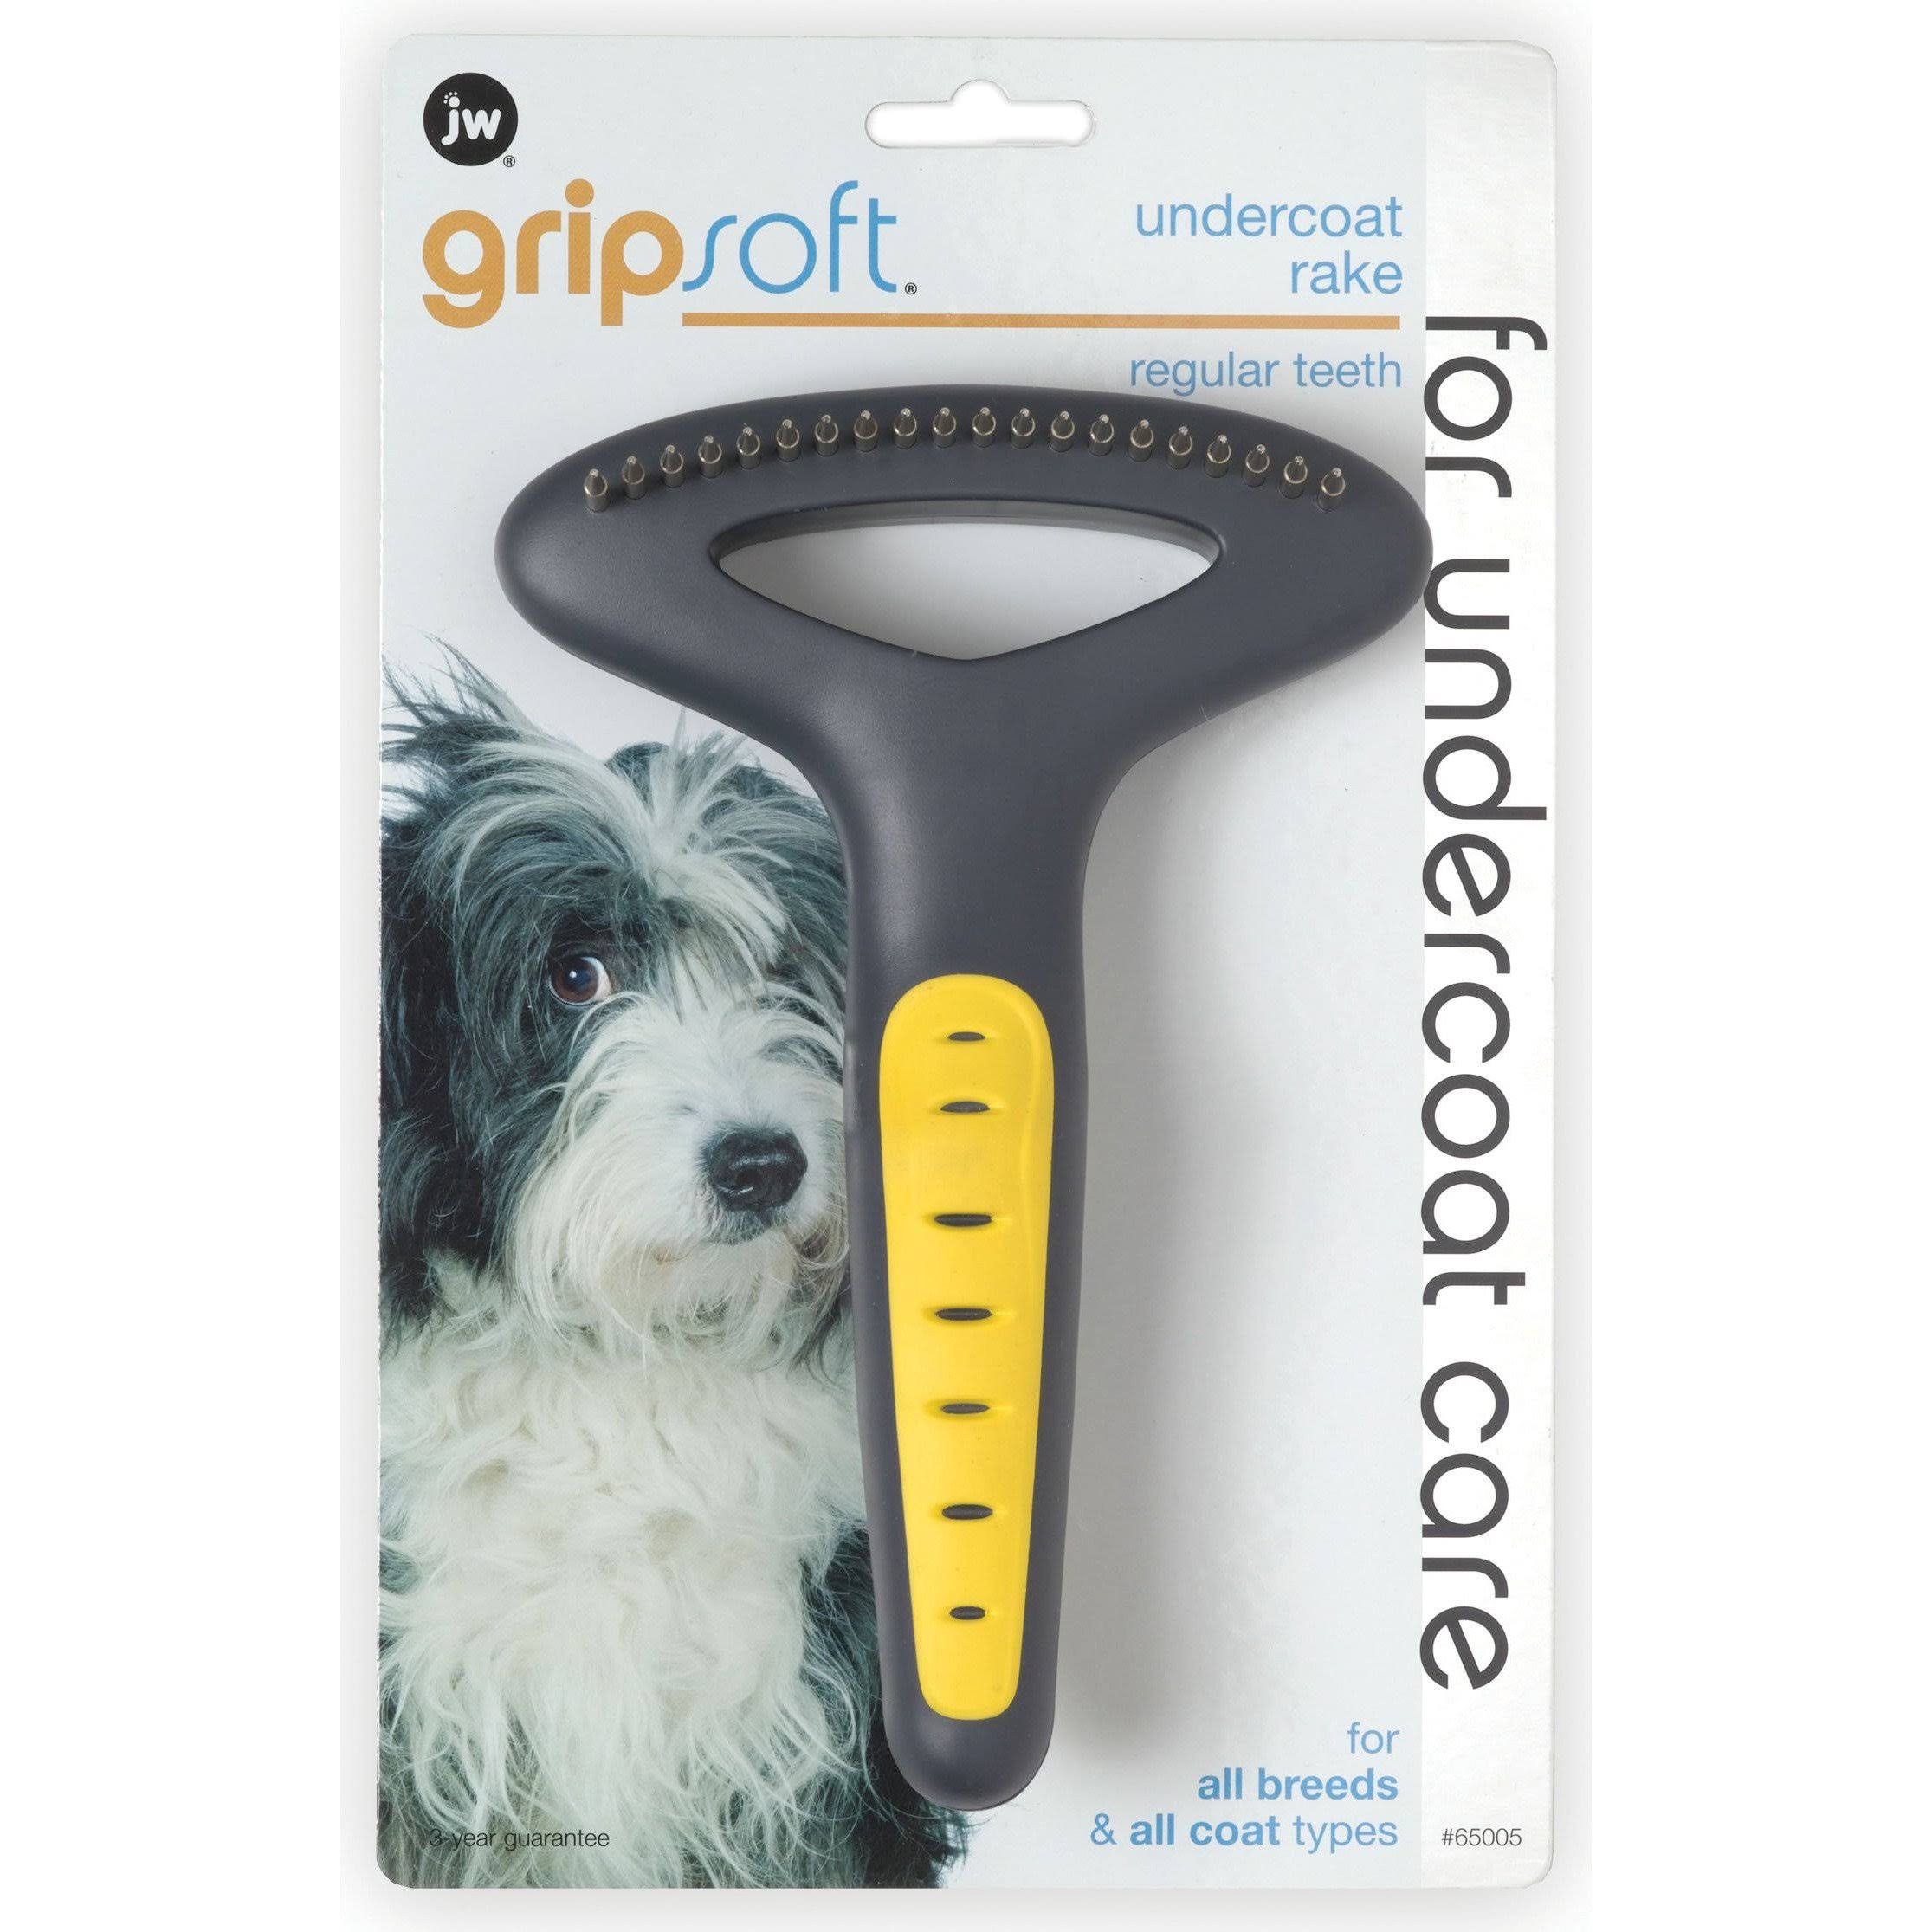 JW Pet Company GripSoft Undercoat Rake Dog Brush - Regular Teeth